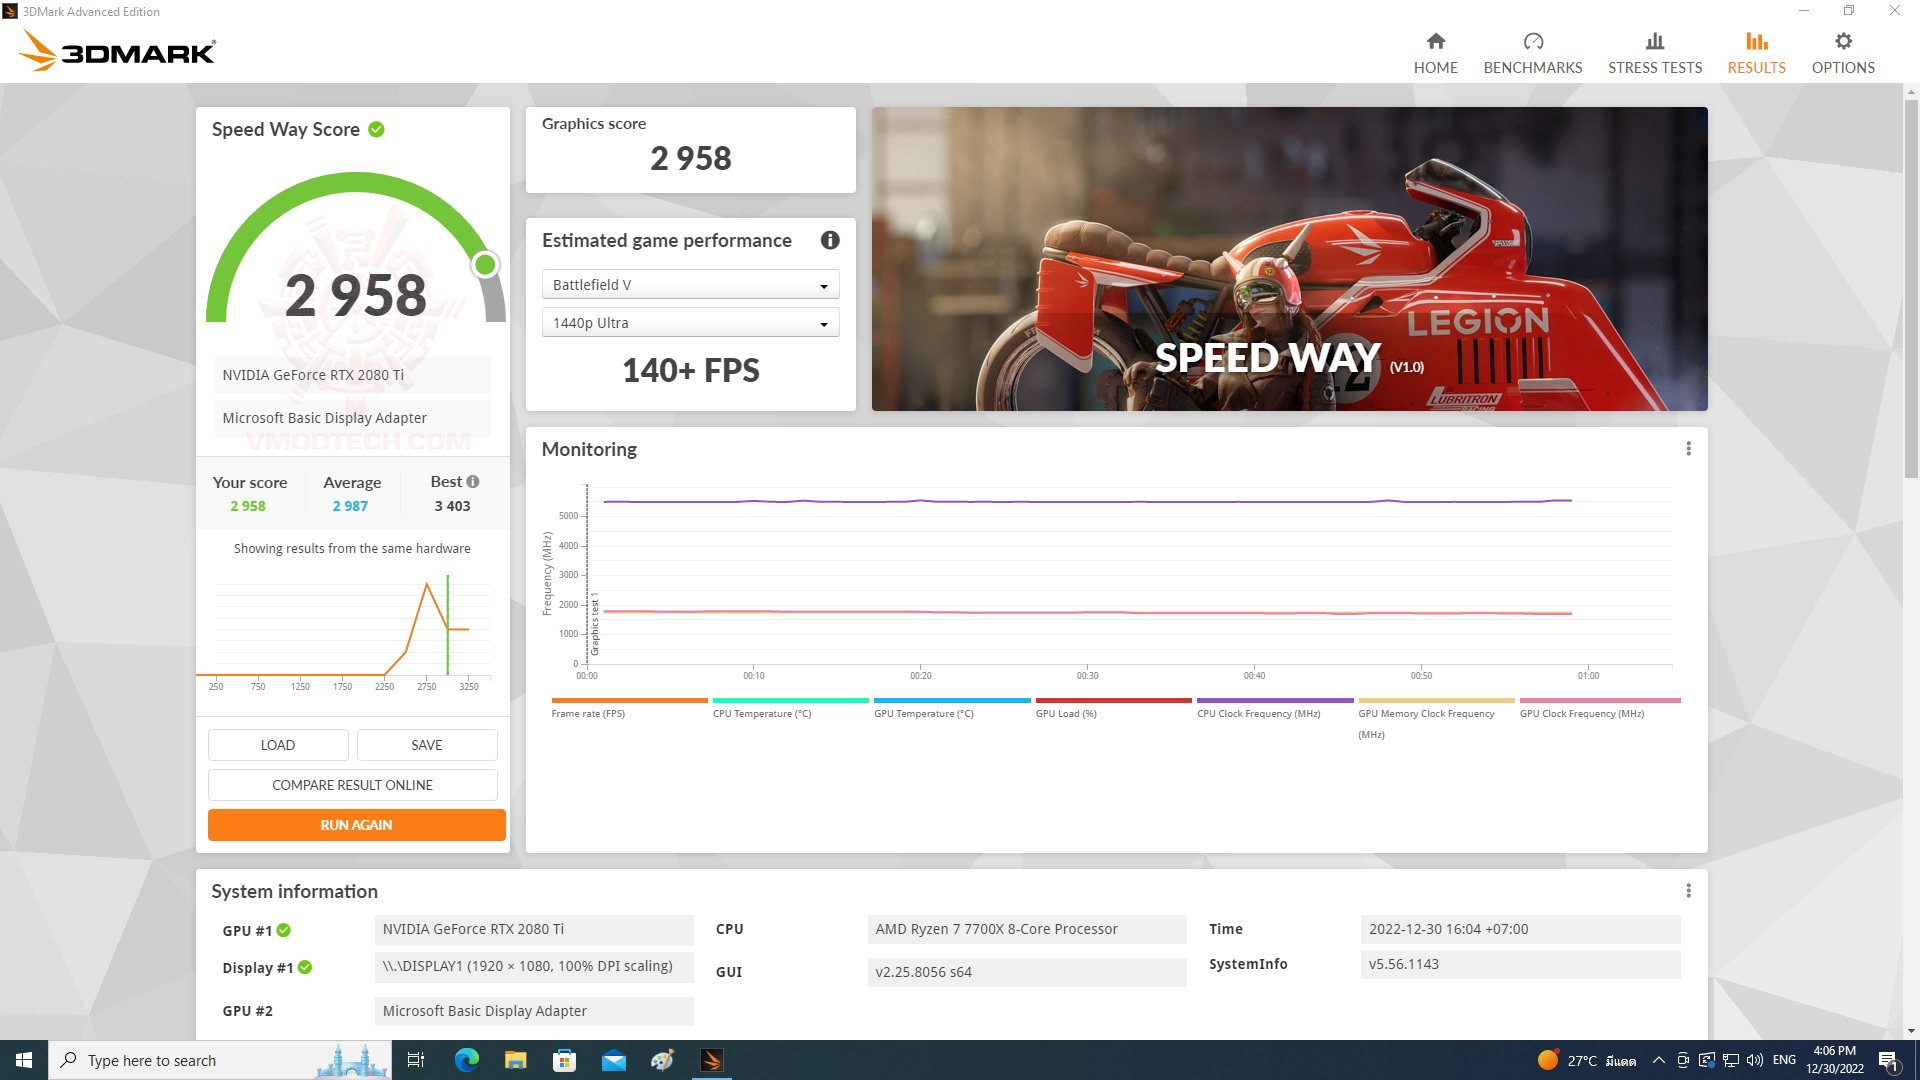 sp AMD RYZEN 7 7700X PROCESSOR REVIEW